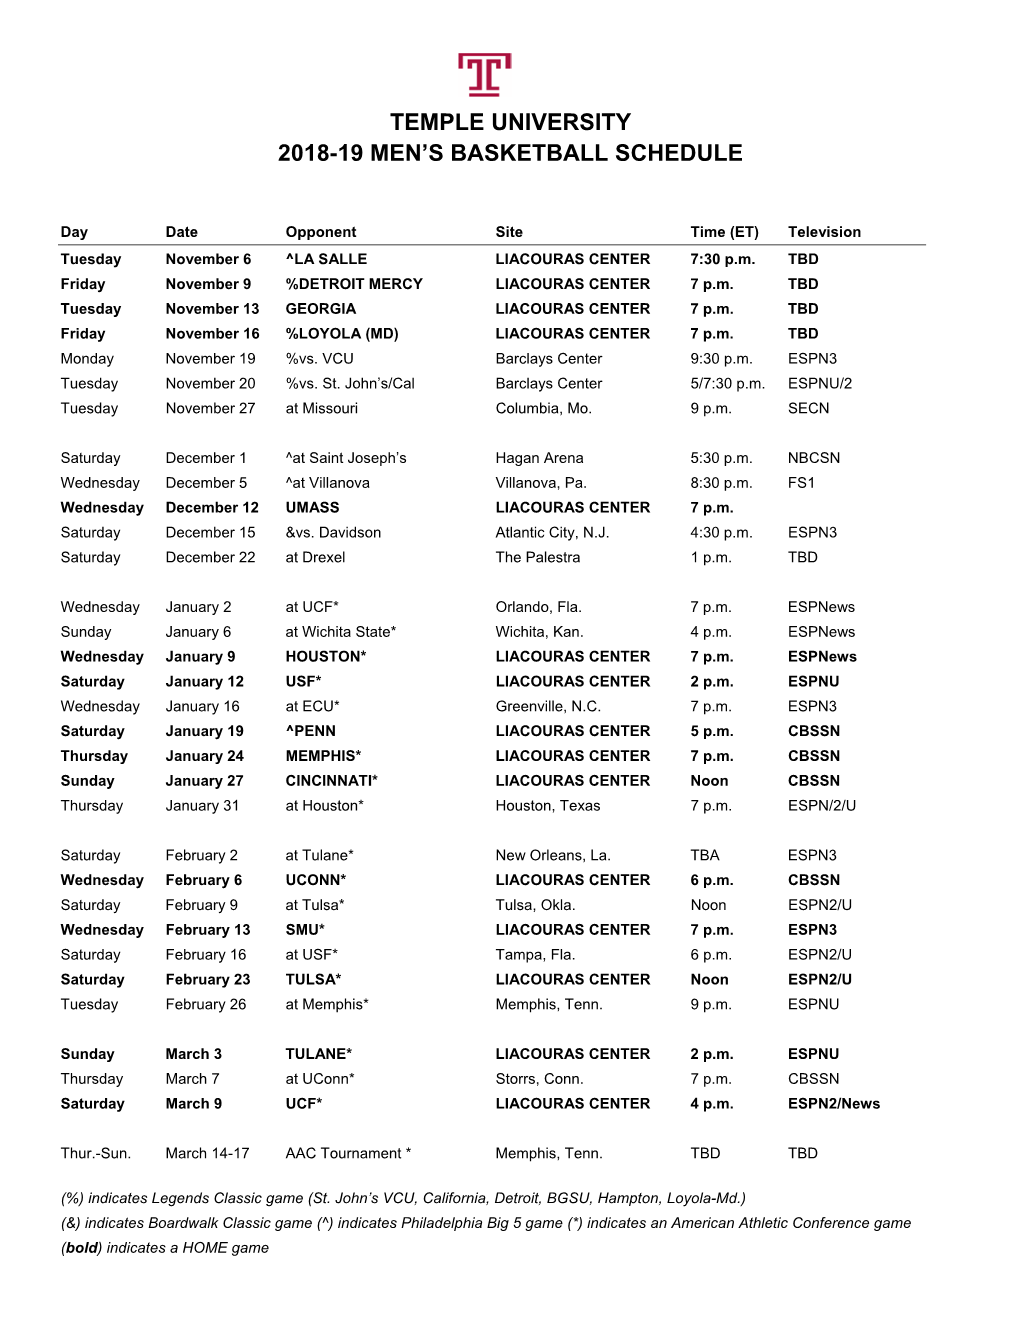 Temple University 2018-19 Men's Basketball Schedule